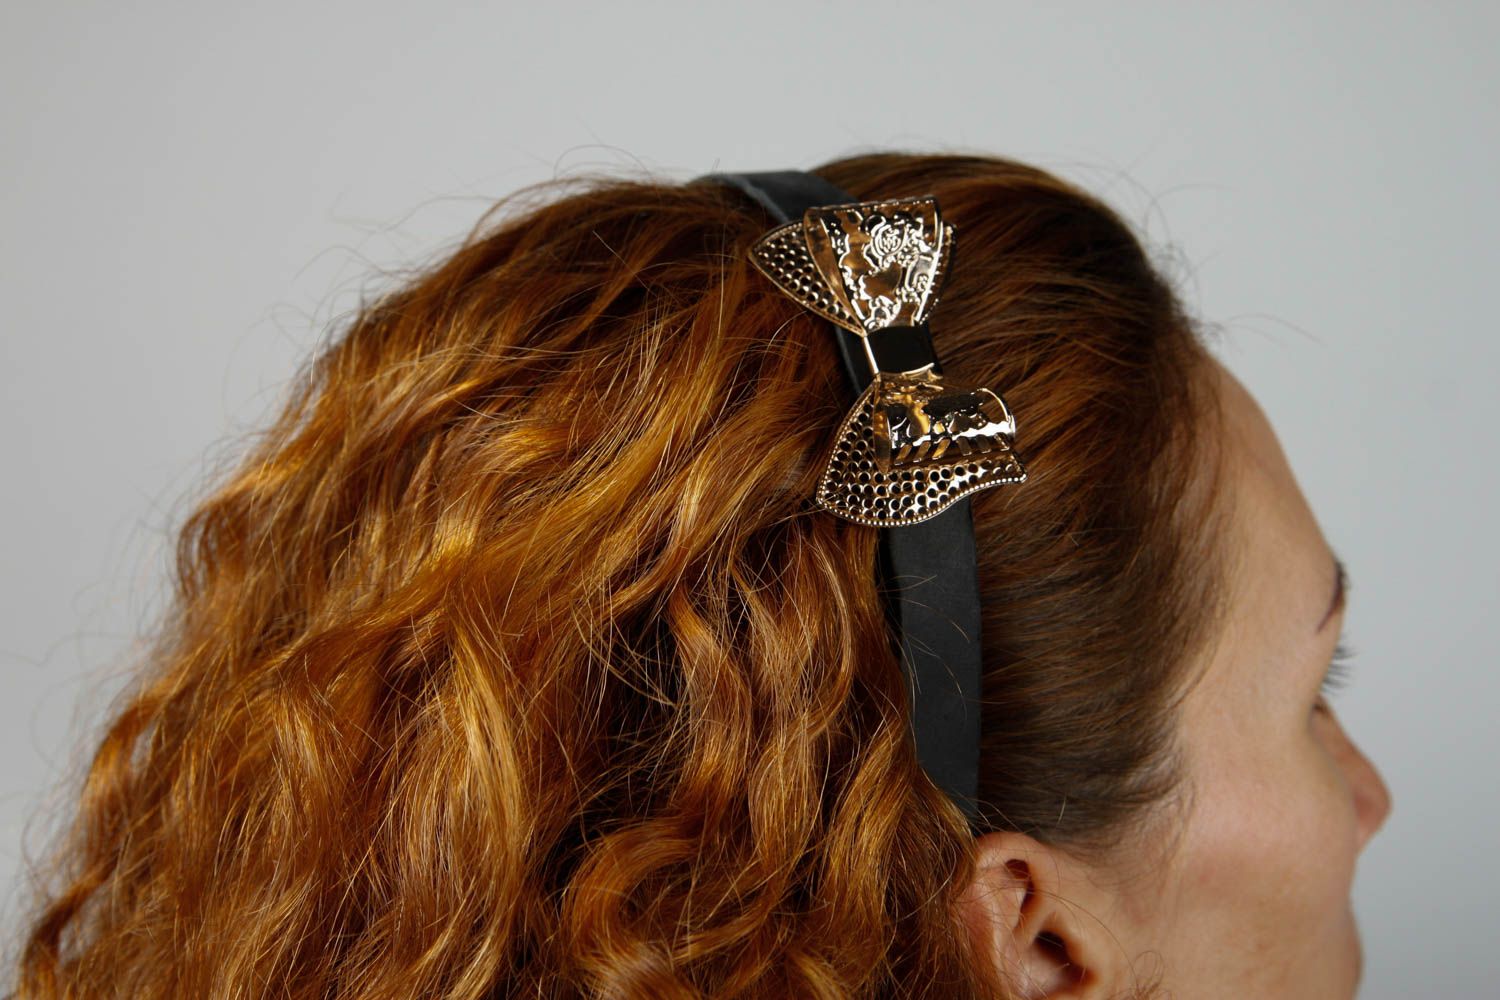 Flower hair accessories hair band handmade leather goods bow headbands photo 2